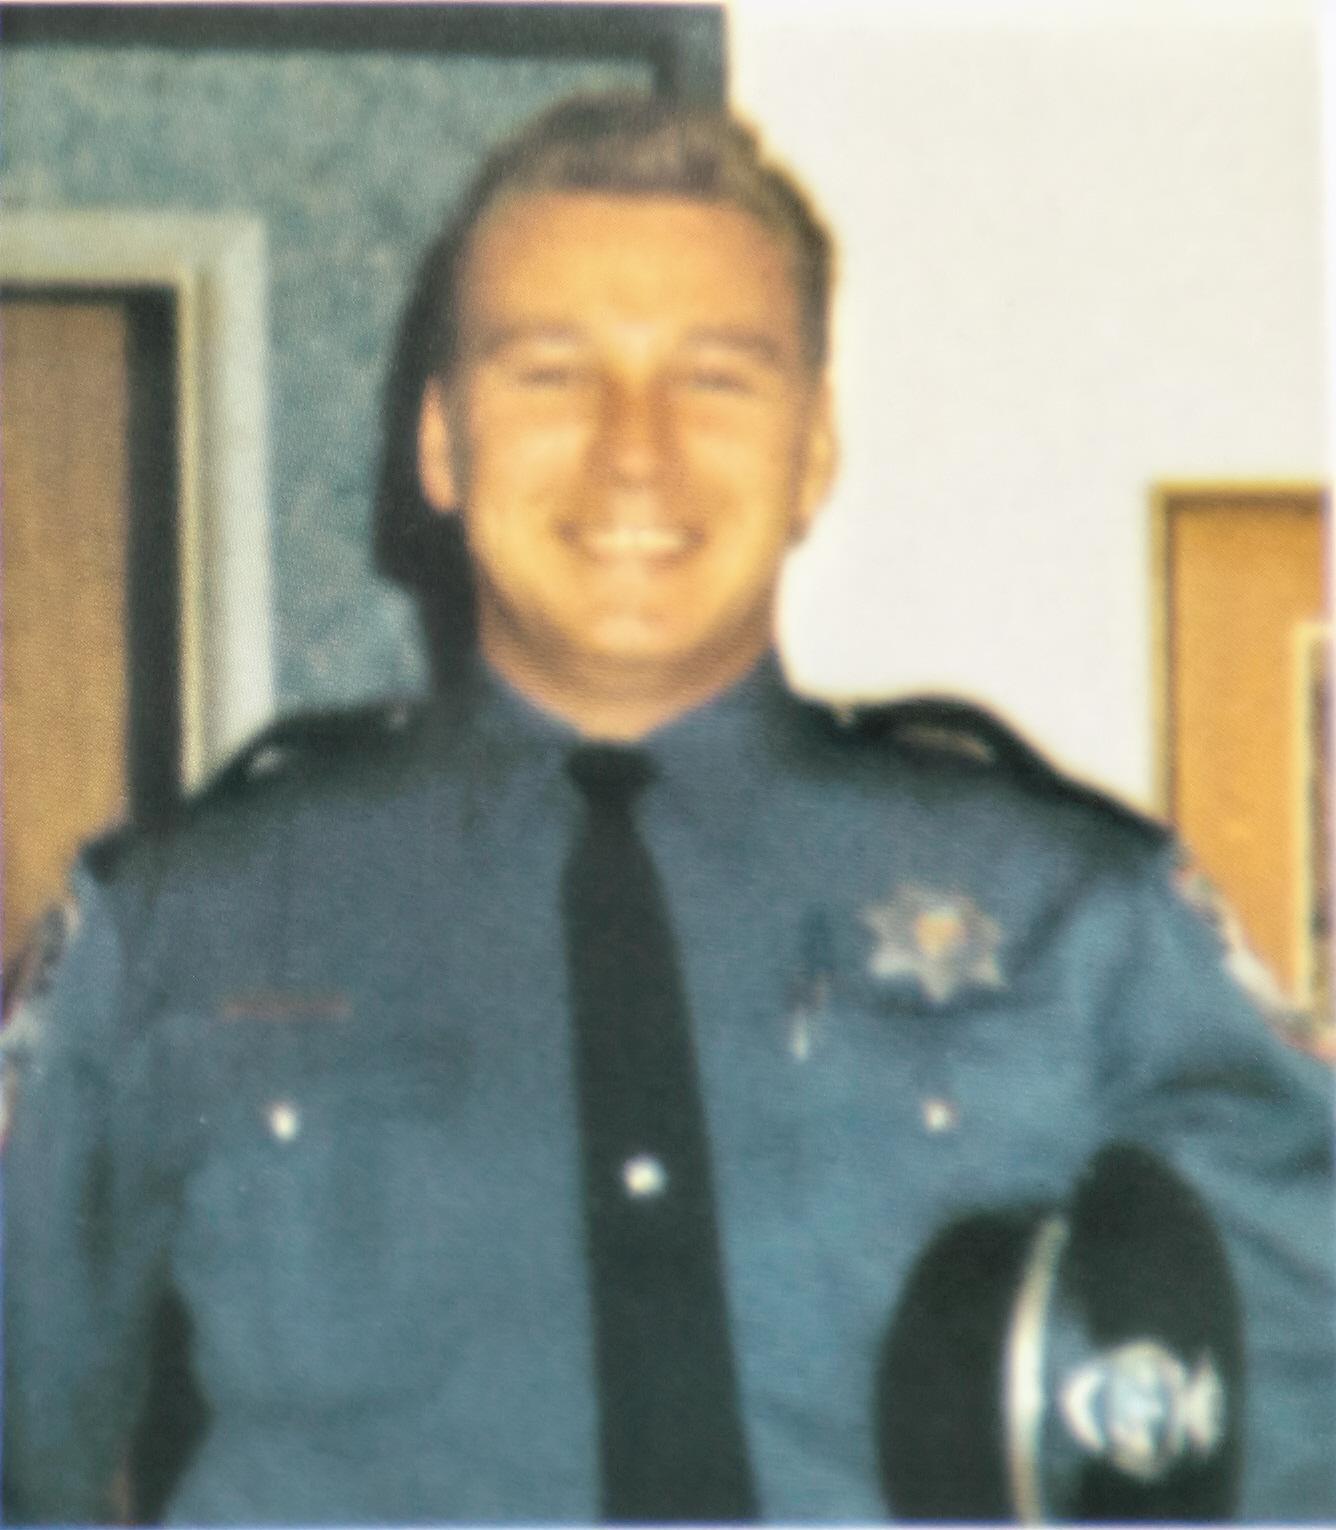 Trooper Gary V. Gifford of the Nevada Highway Patrol